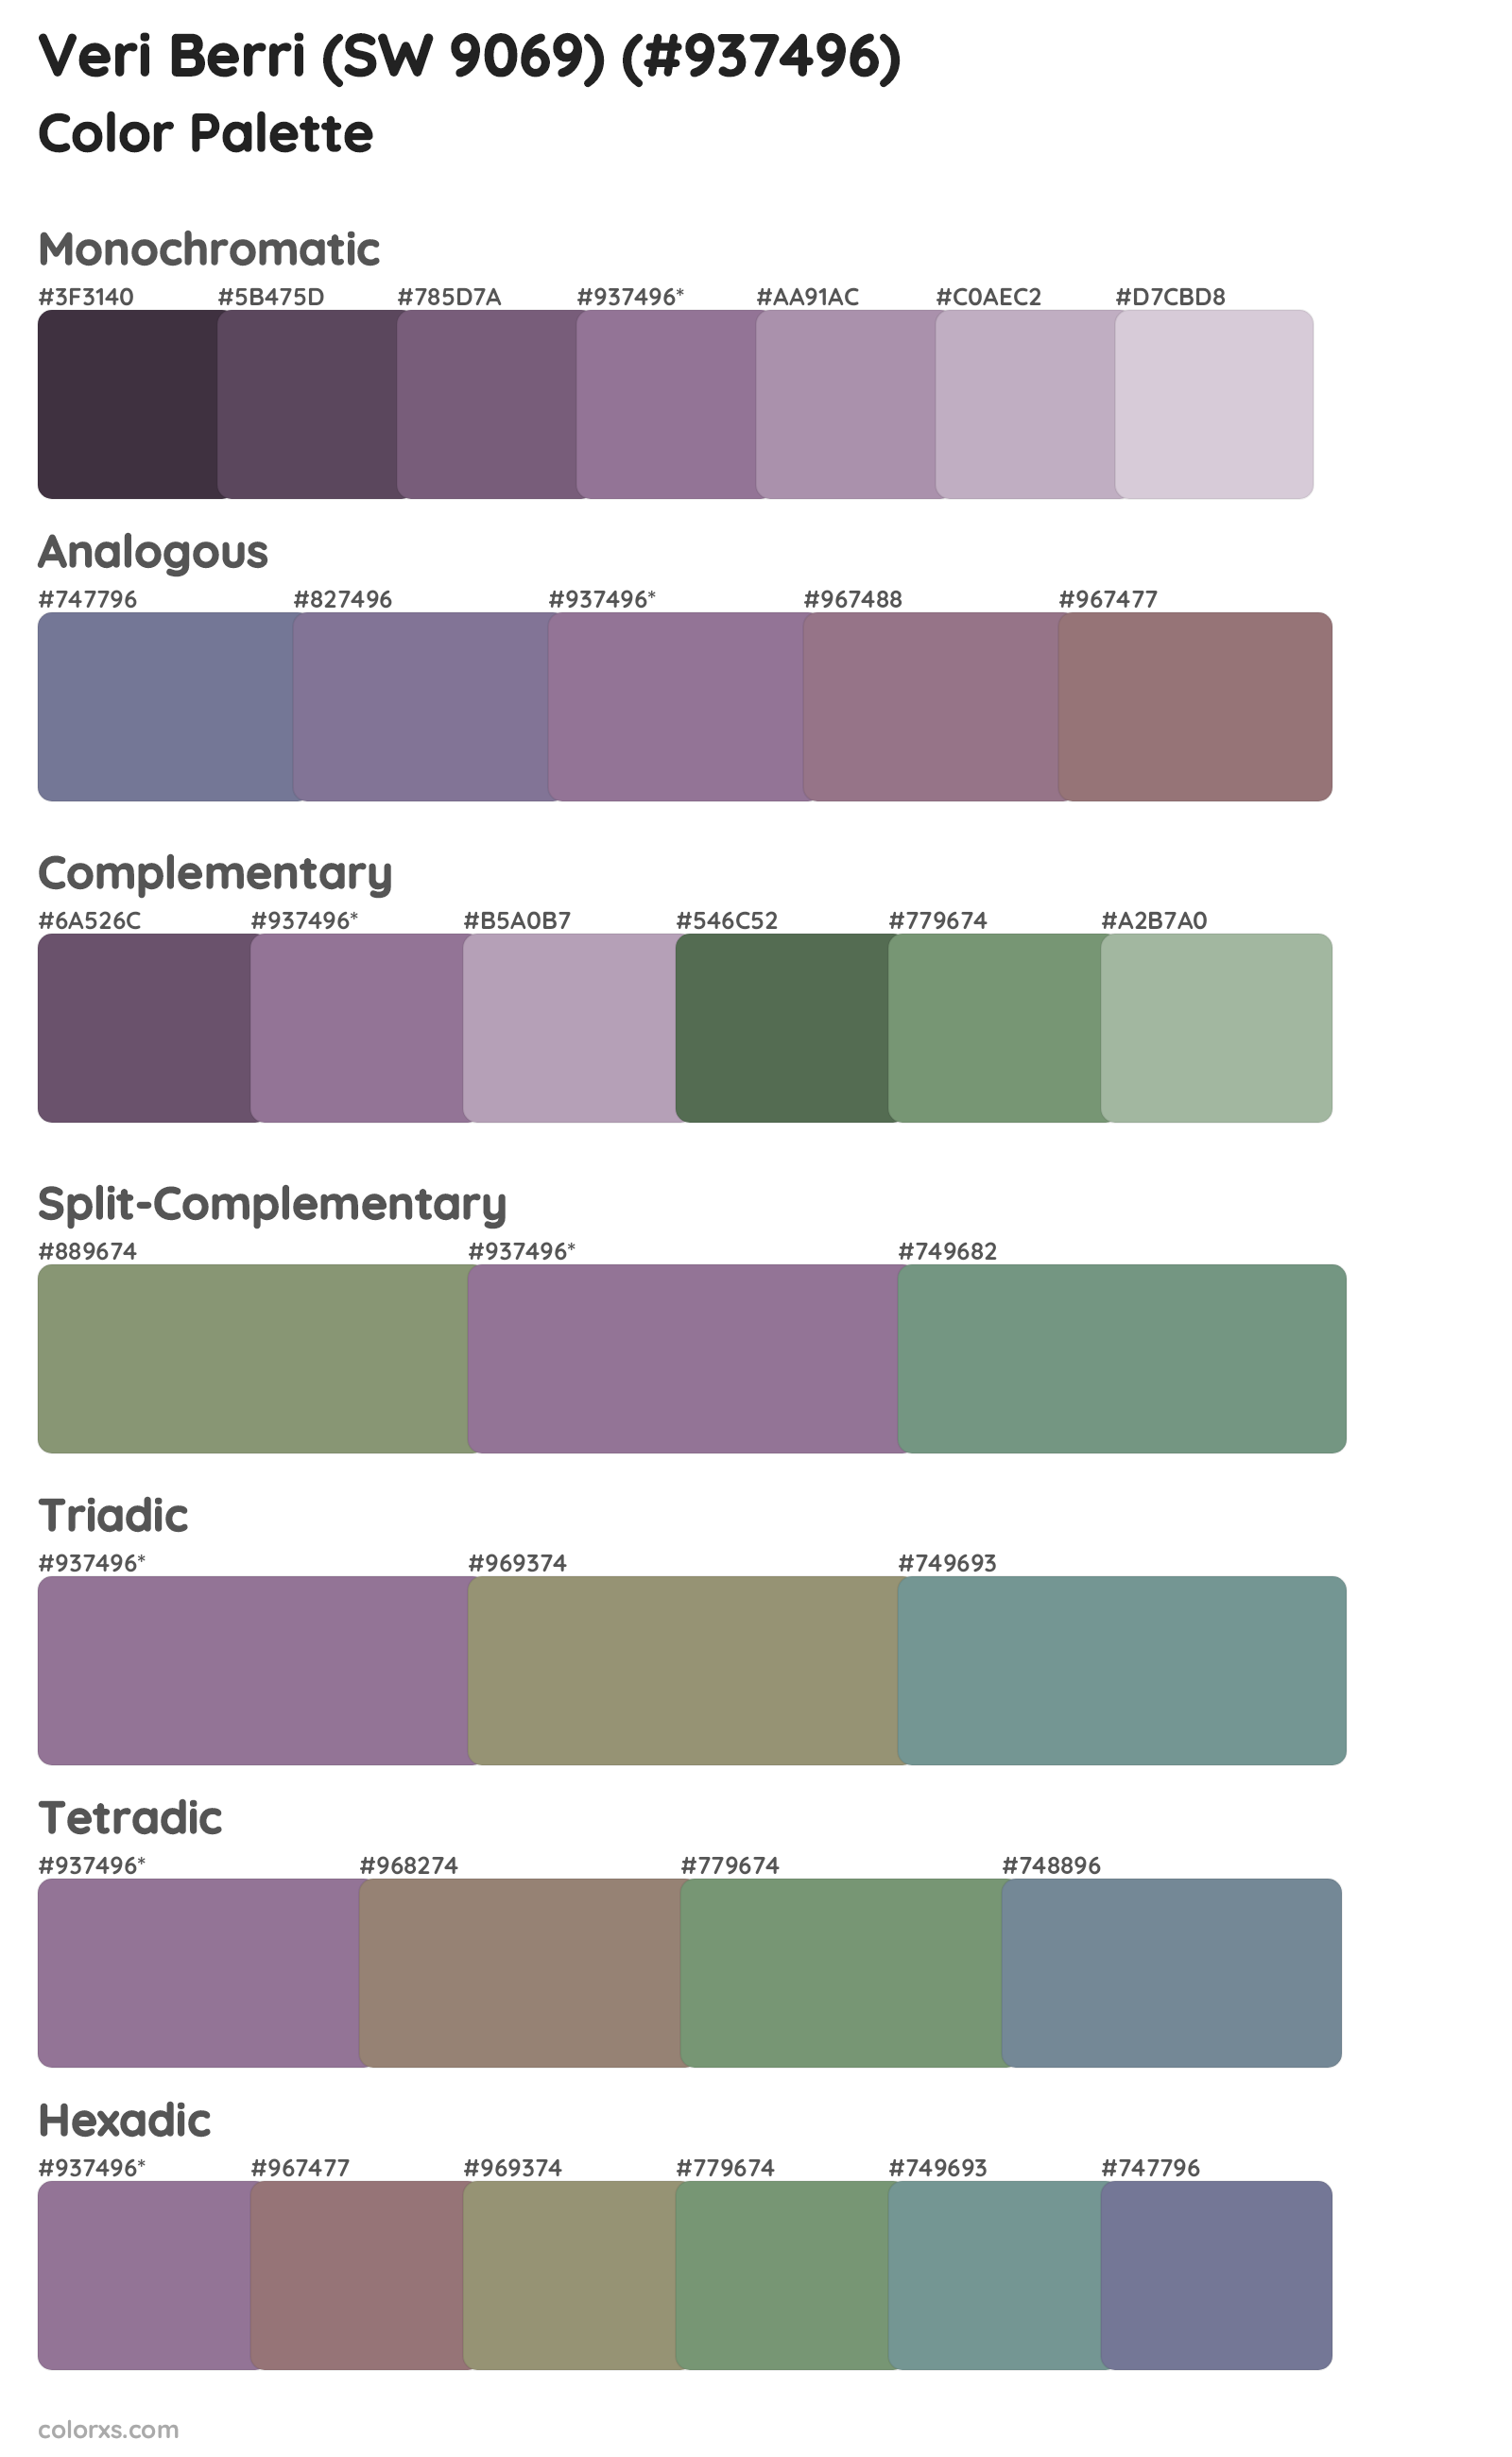 Veri Berri (SW 9069) Color Scheme Palettes